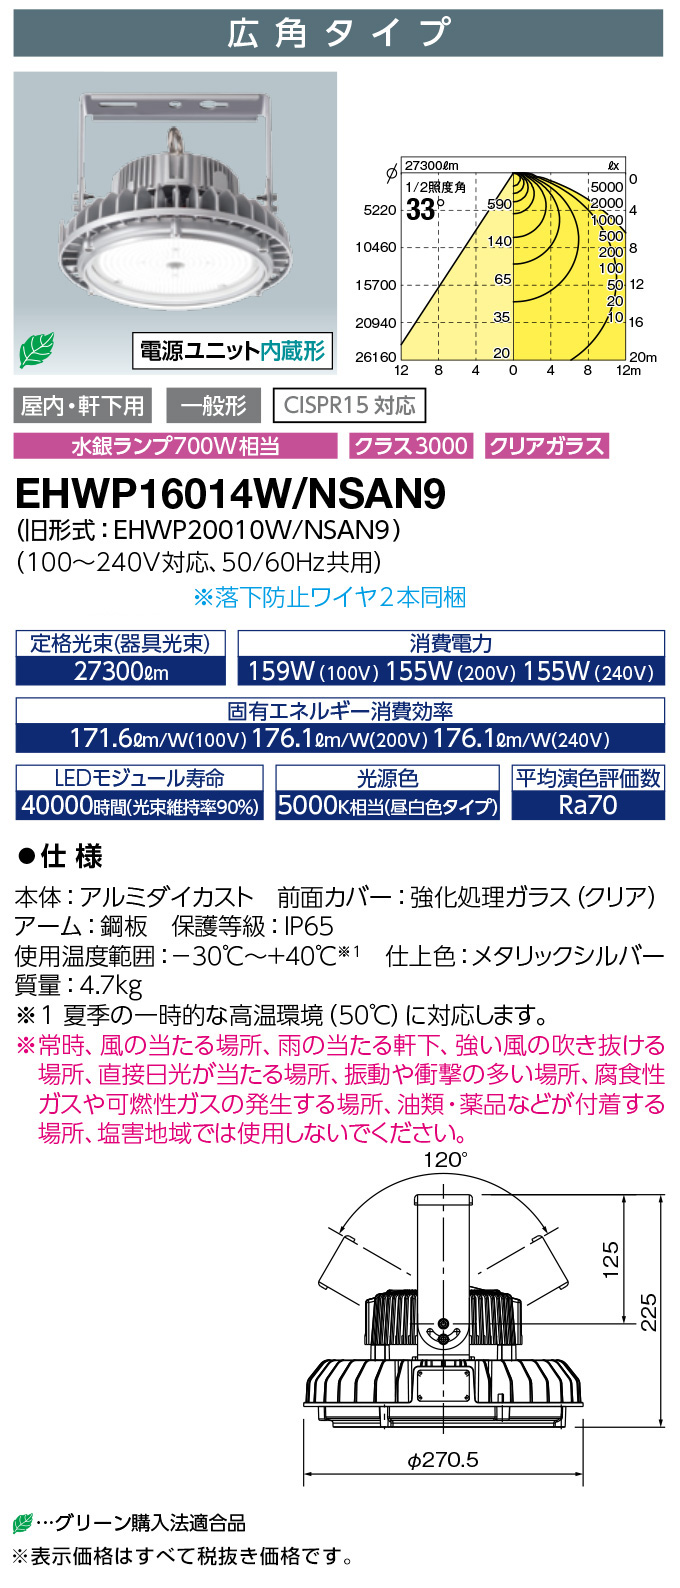 EHWP16014W/NSAN9